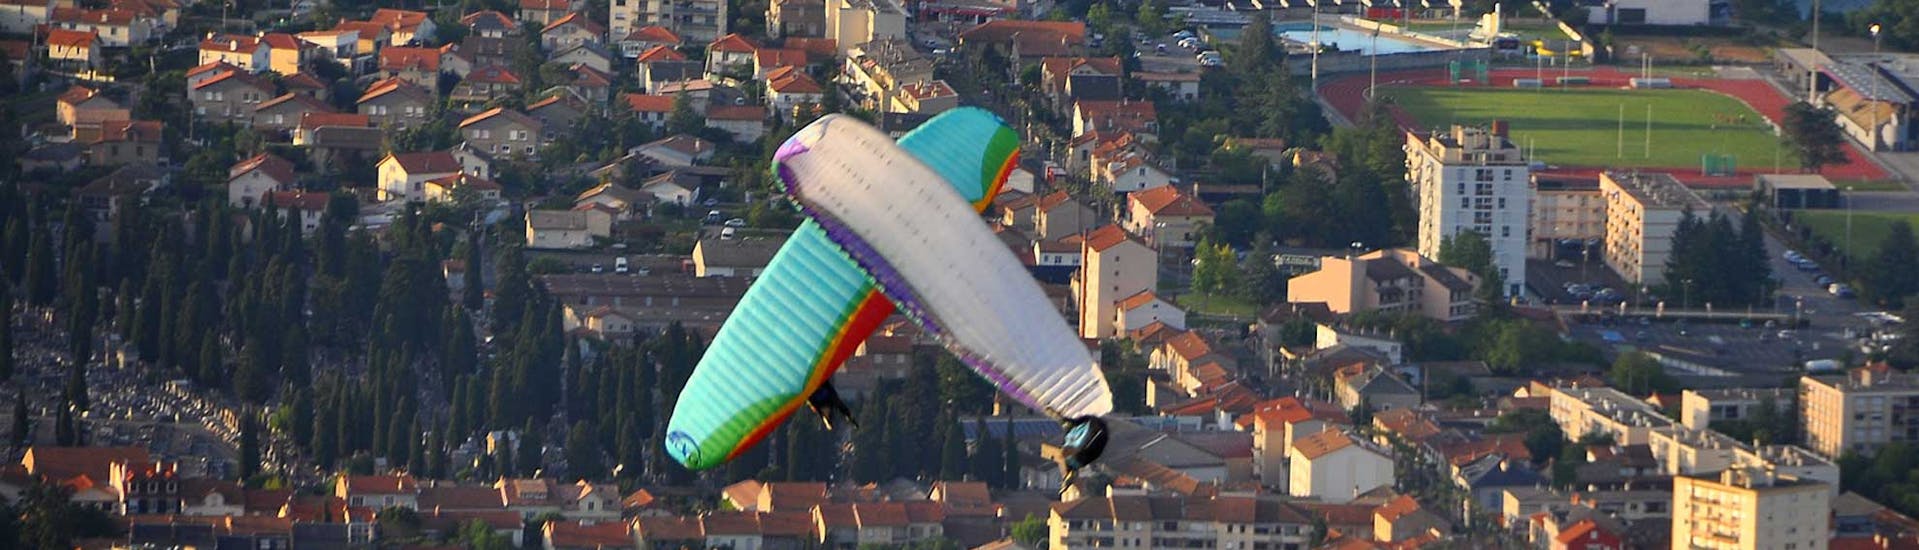 Acrobatisch tandemparagliden (vanaf 11 j.) - Millau.